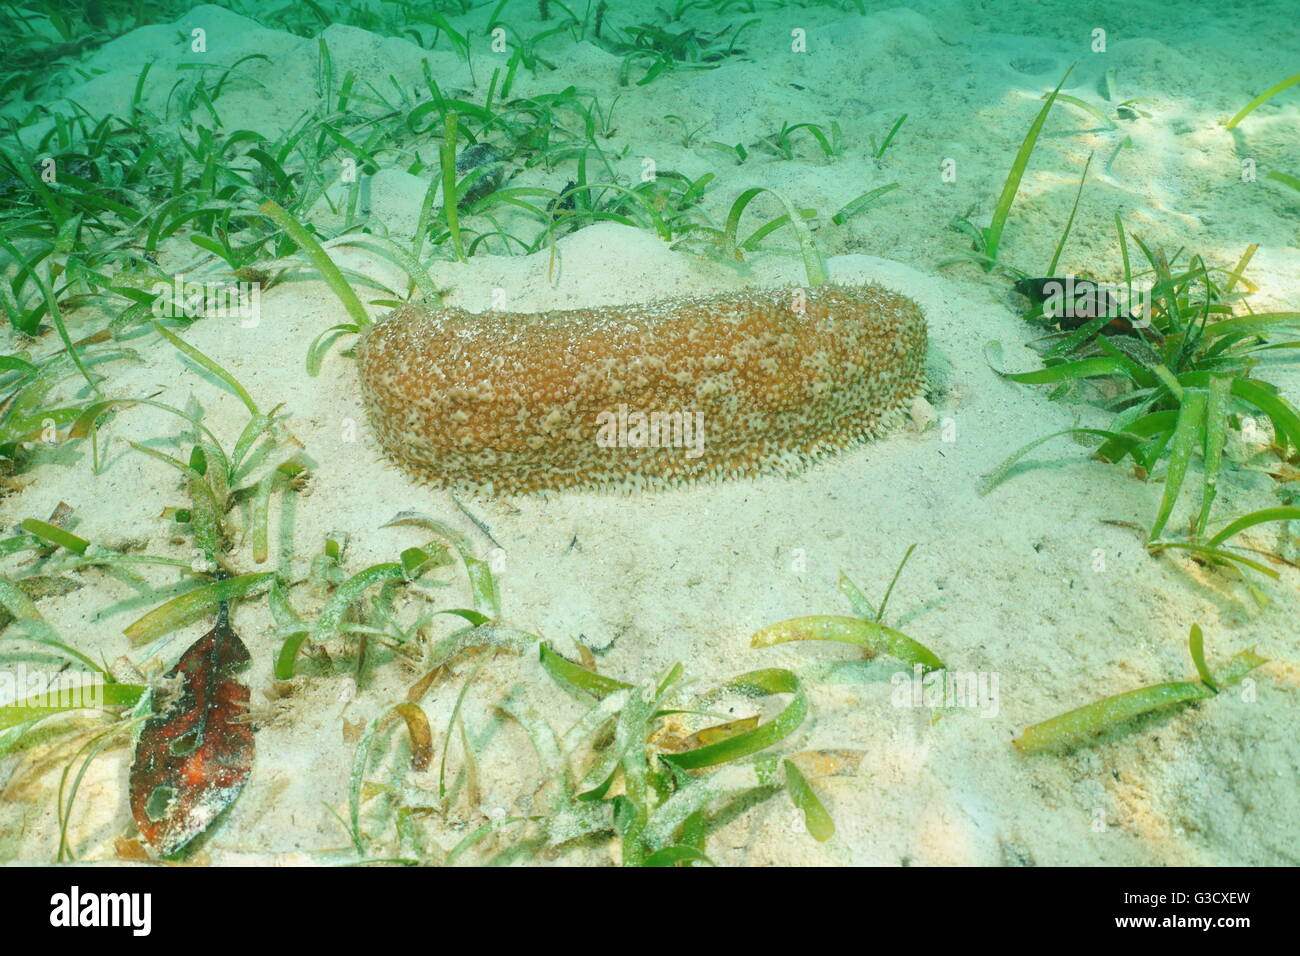 Marine life, Astichopus multifidus, commonly known as furry sea cucumber or fissured sea cucumber, underwater Caribbean sea Stock Photo